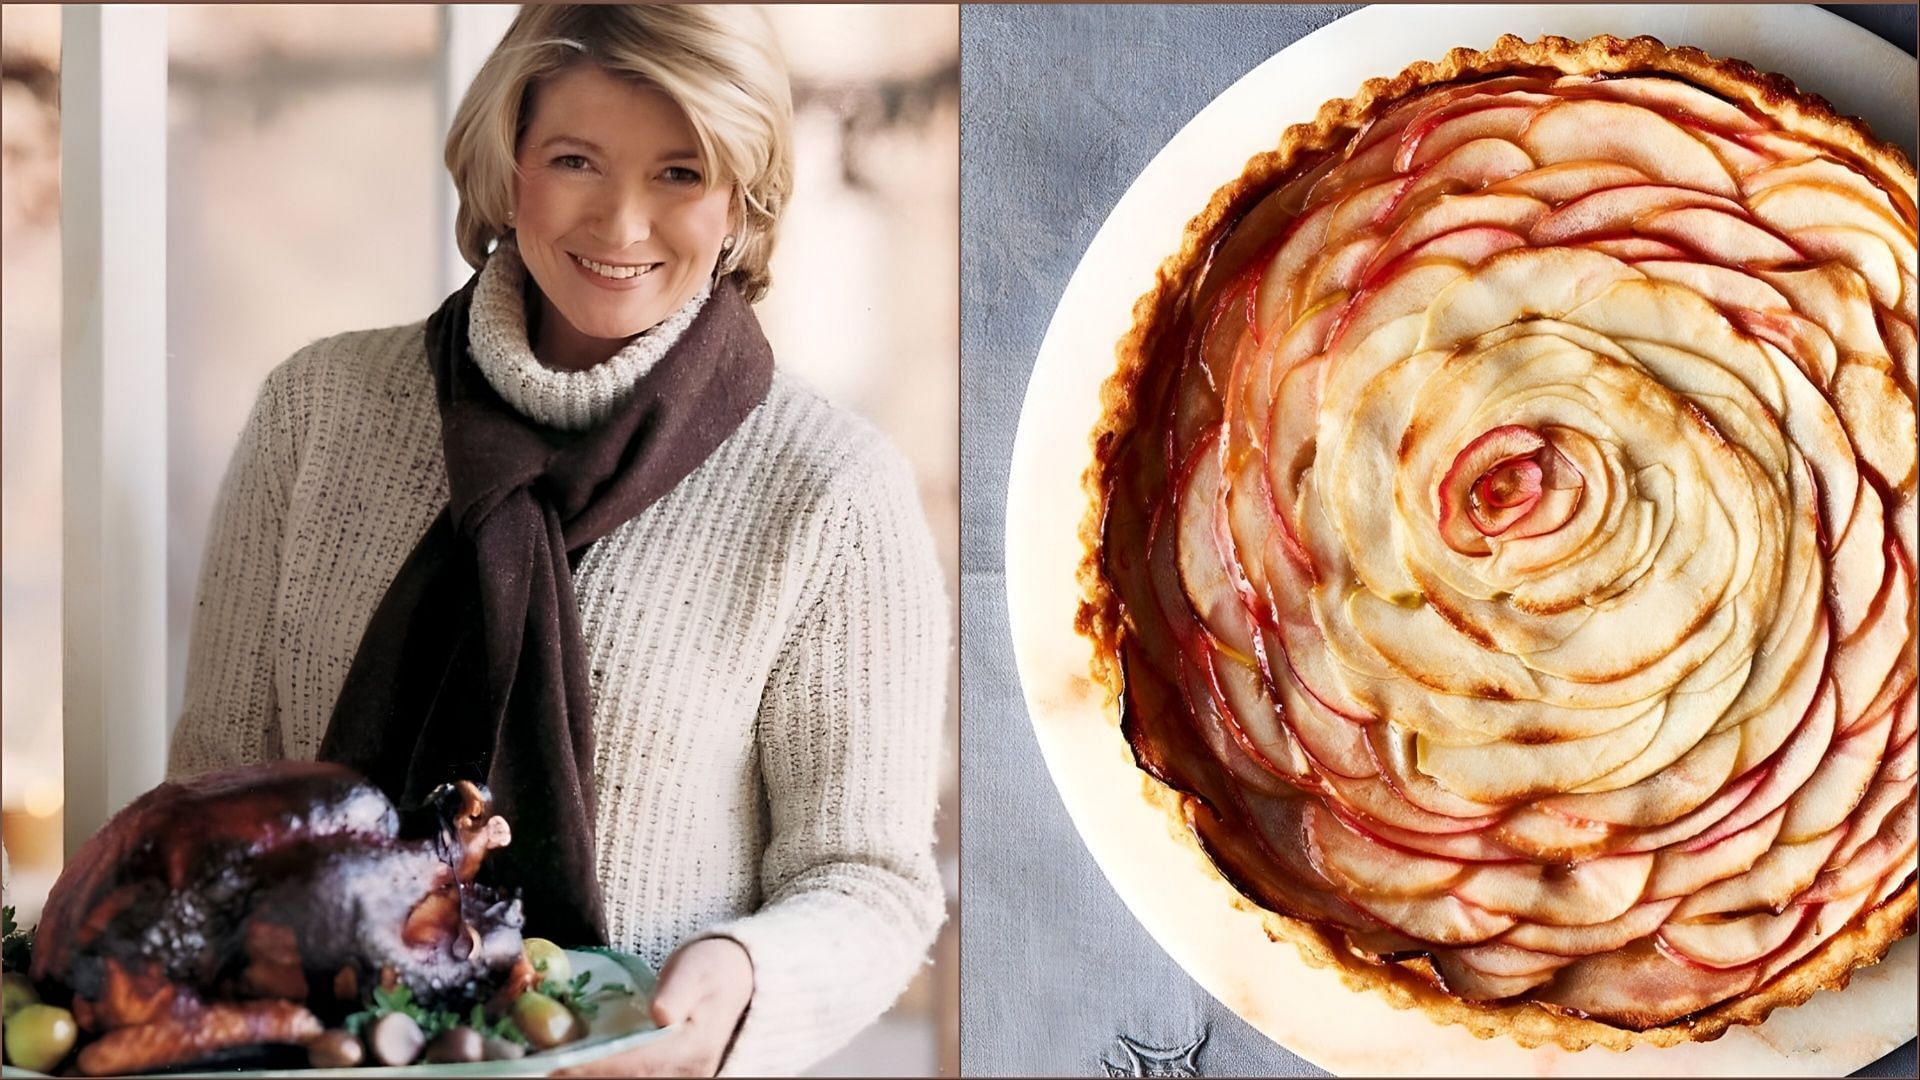 Queen of Thanksgiving' Martha Stewart is 'turkeyed out